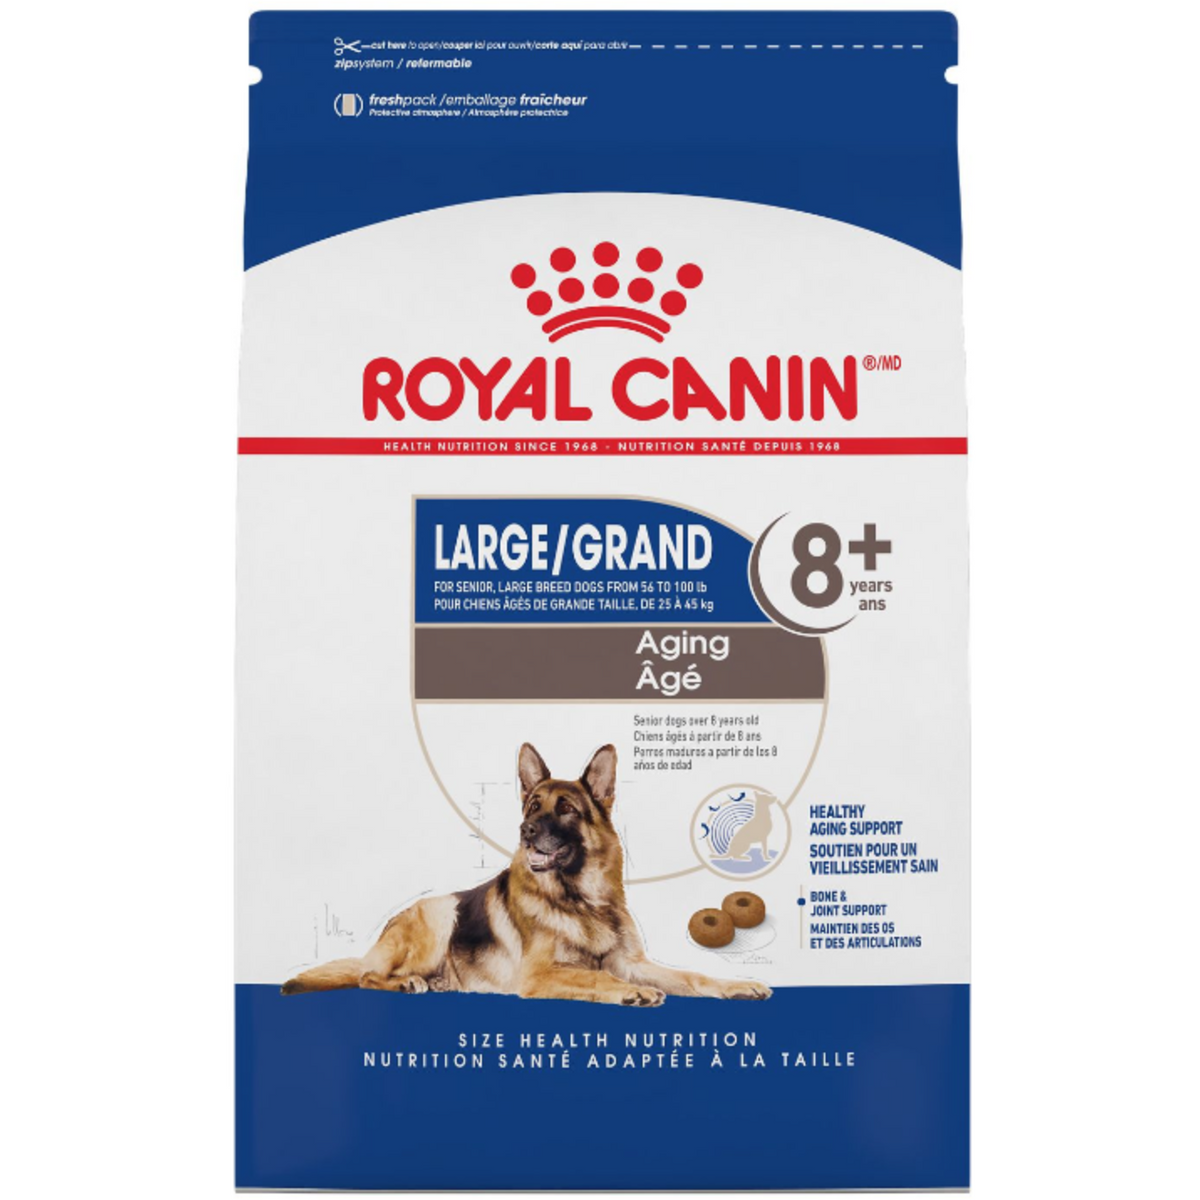 Royal Canin LARGE Ageing 8+ Dog Food (30 lb)